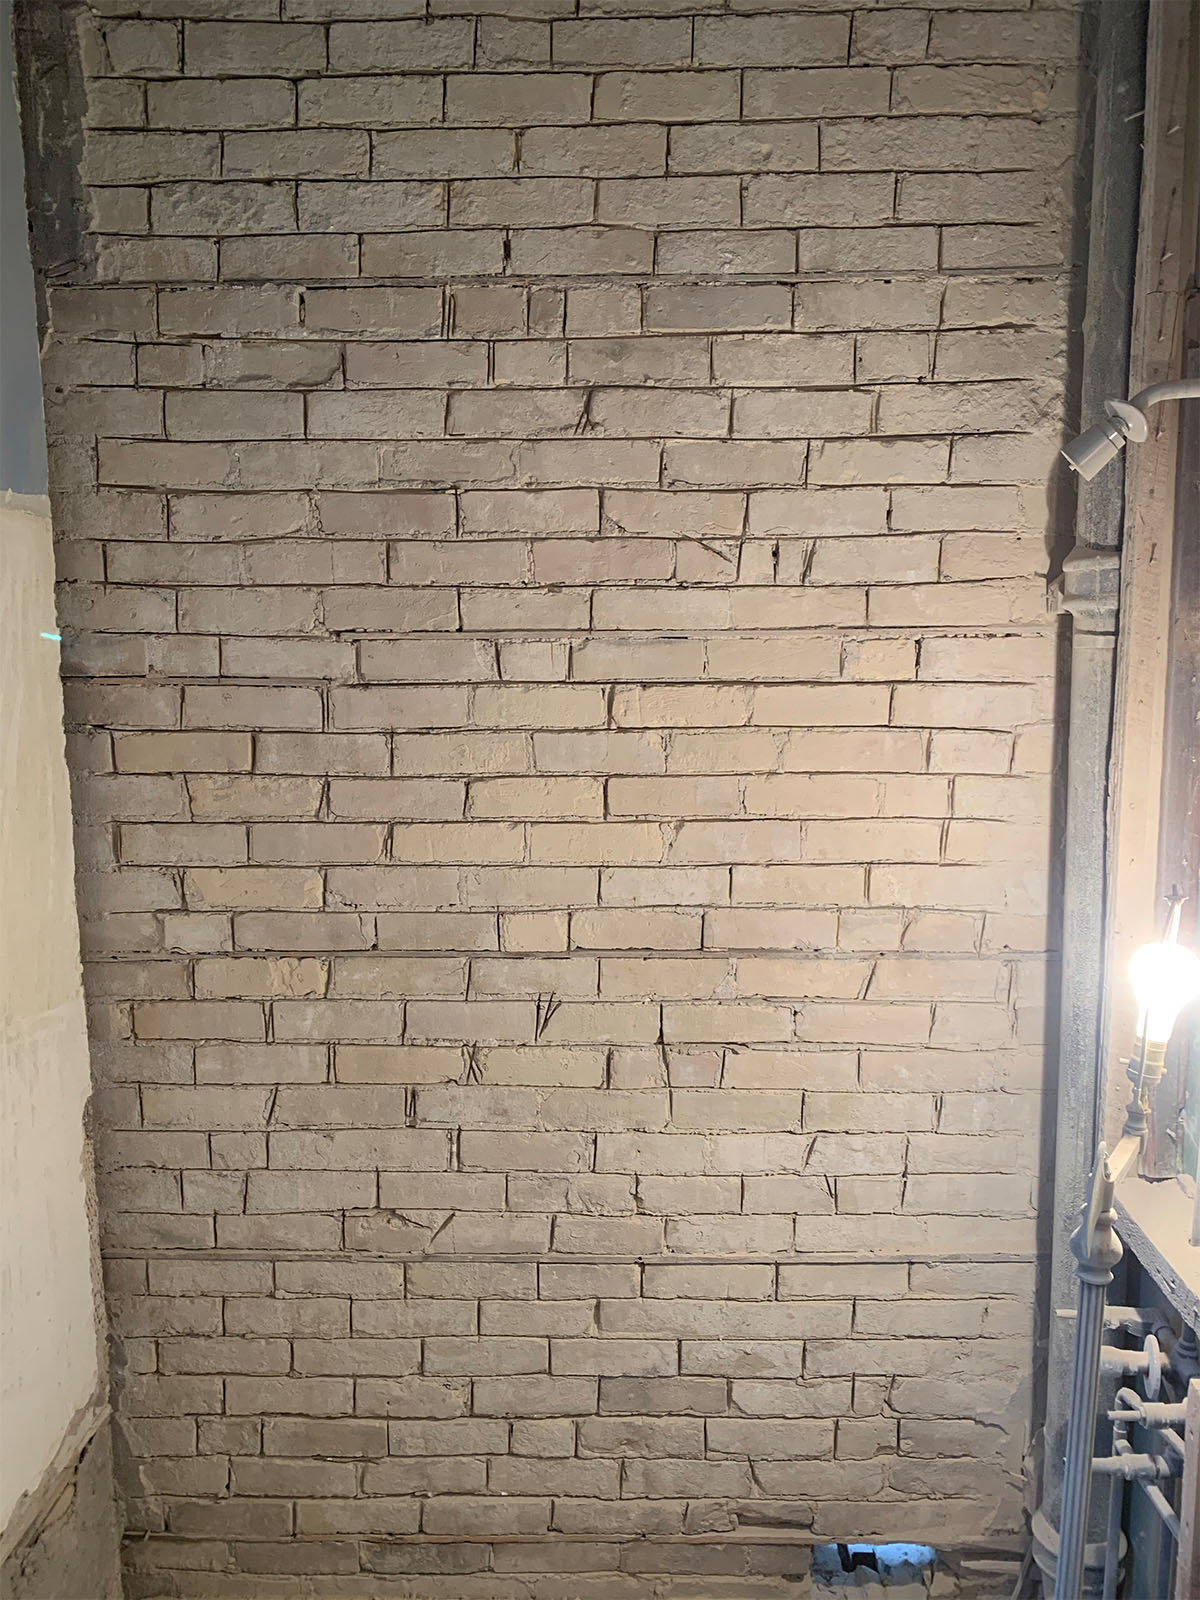 Century Brick Wall After Restoration